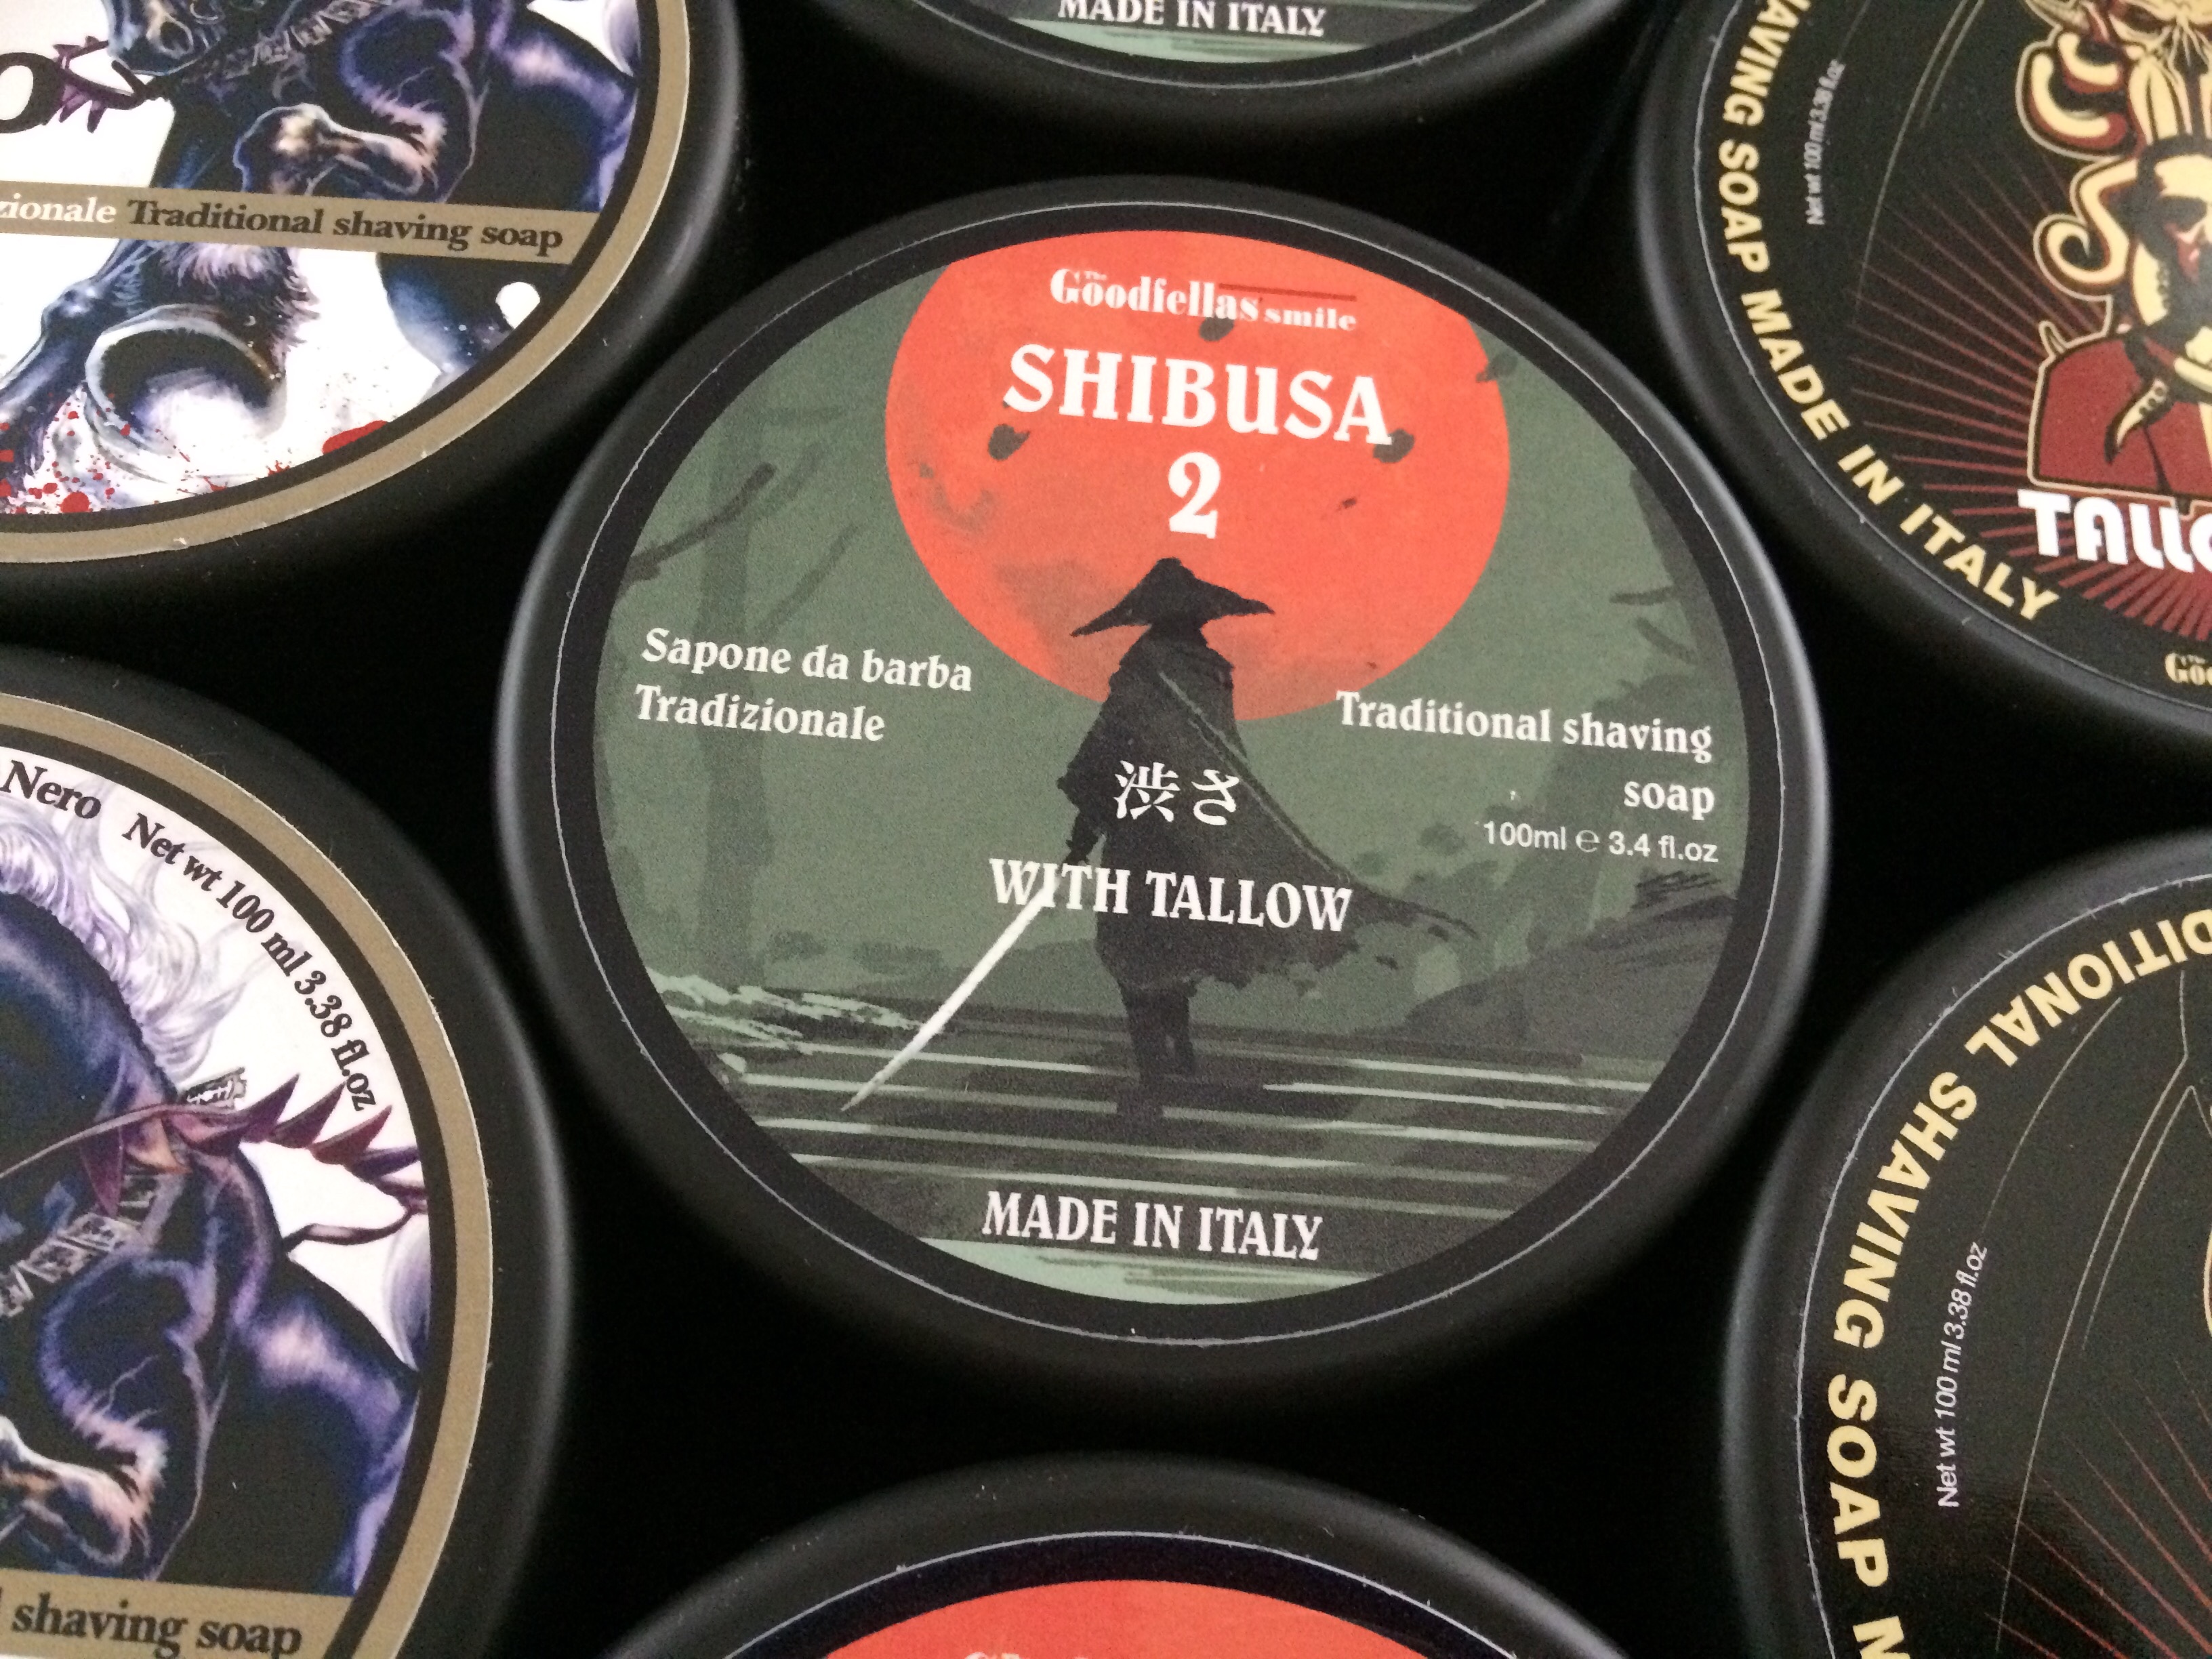 The Goodfellas Smile Shibusa 2 Shaving Soap | Agent Shave